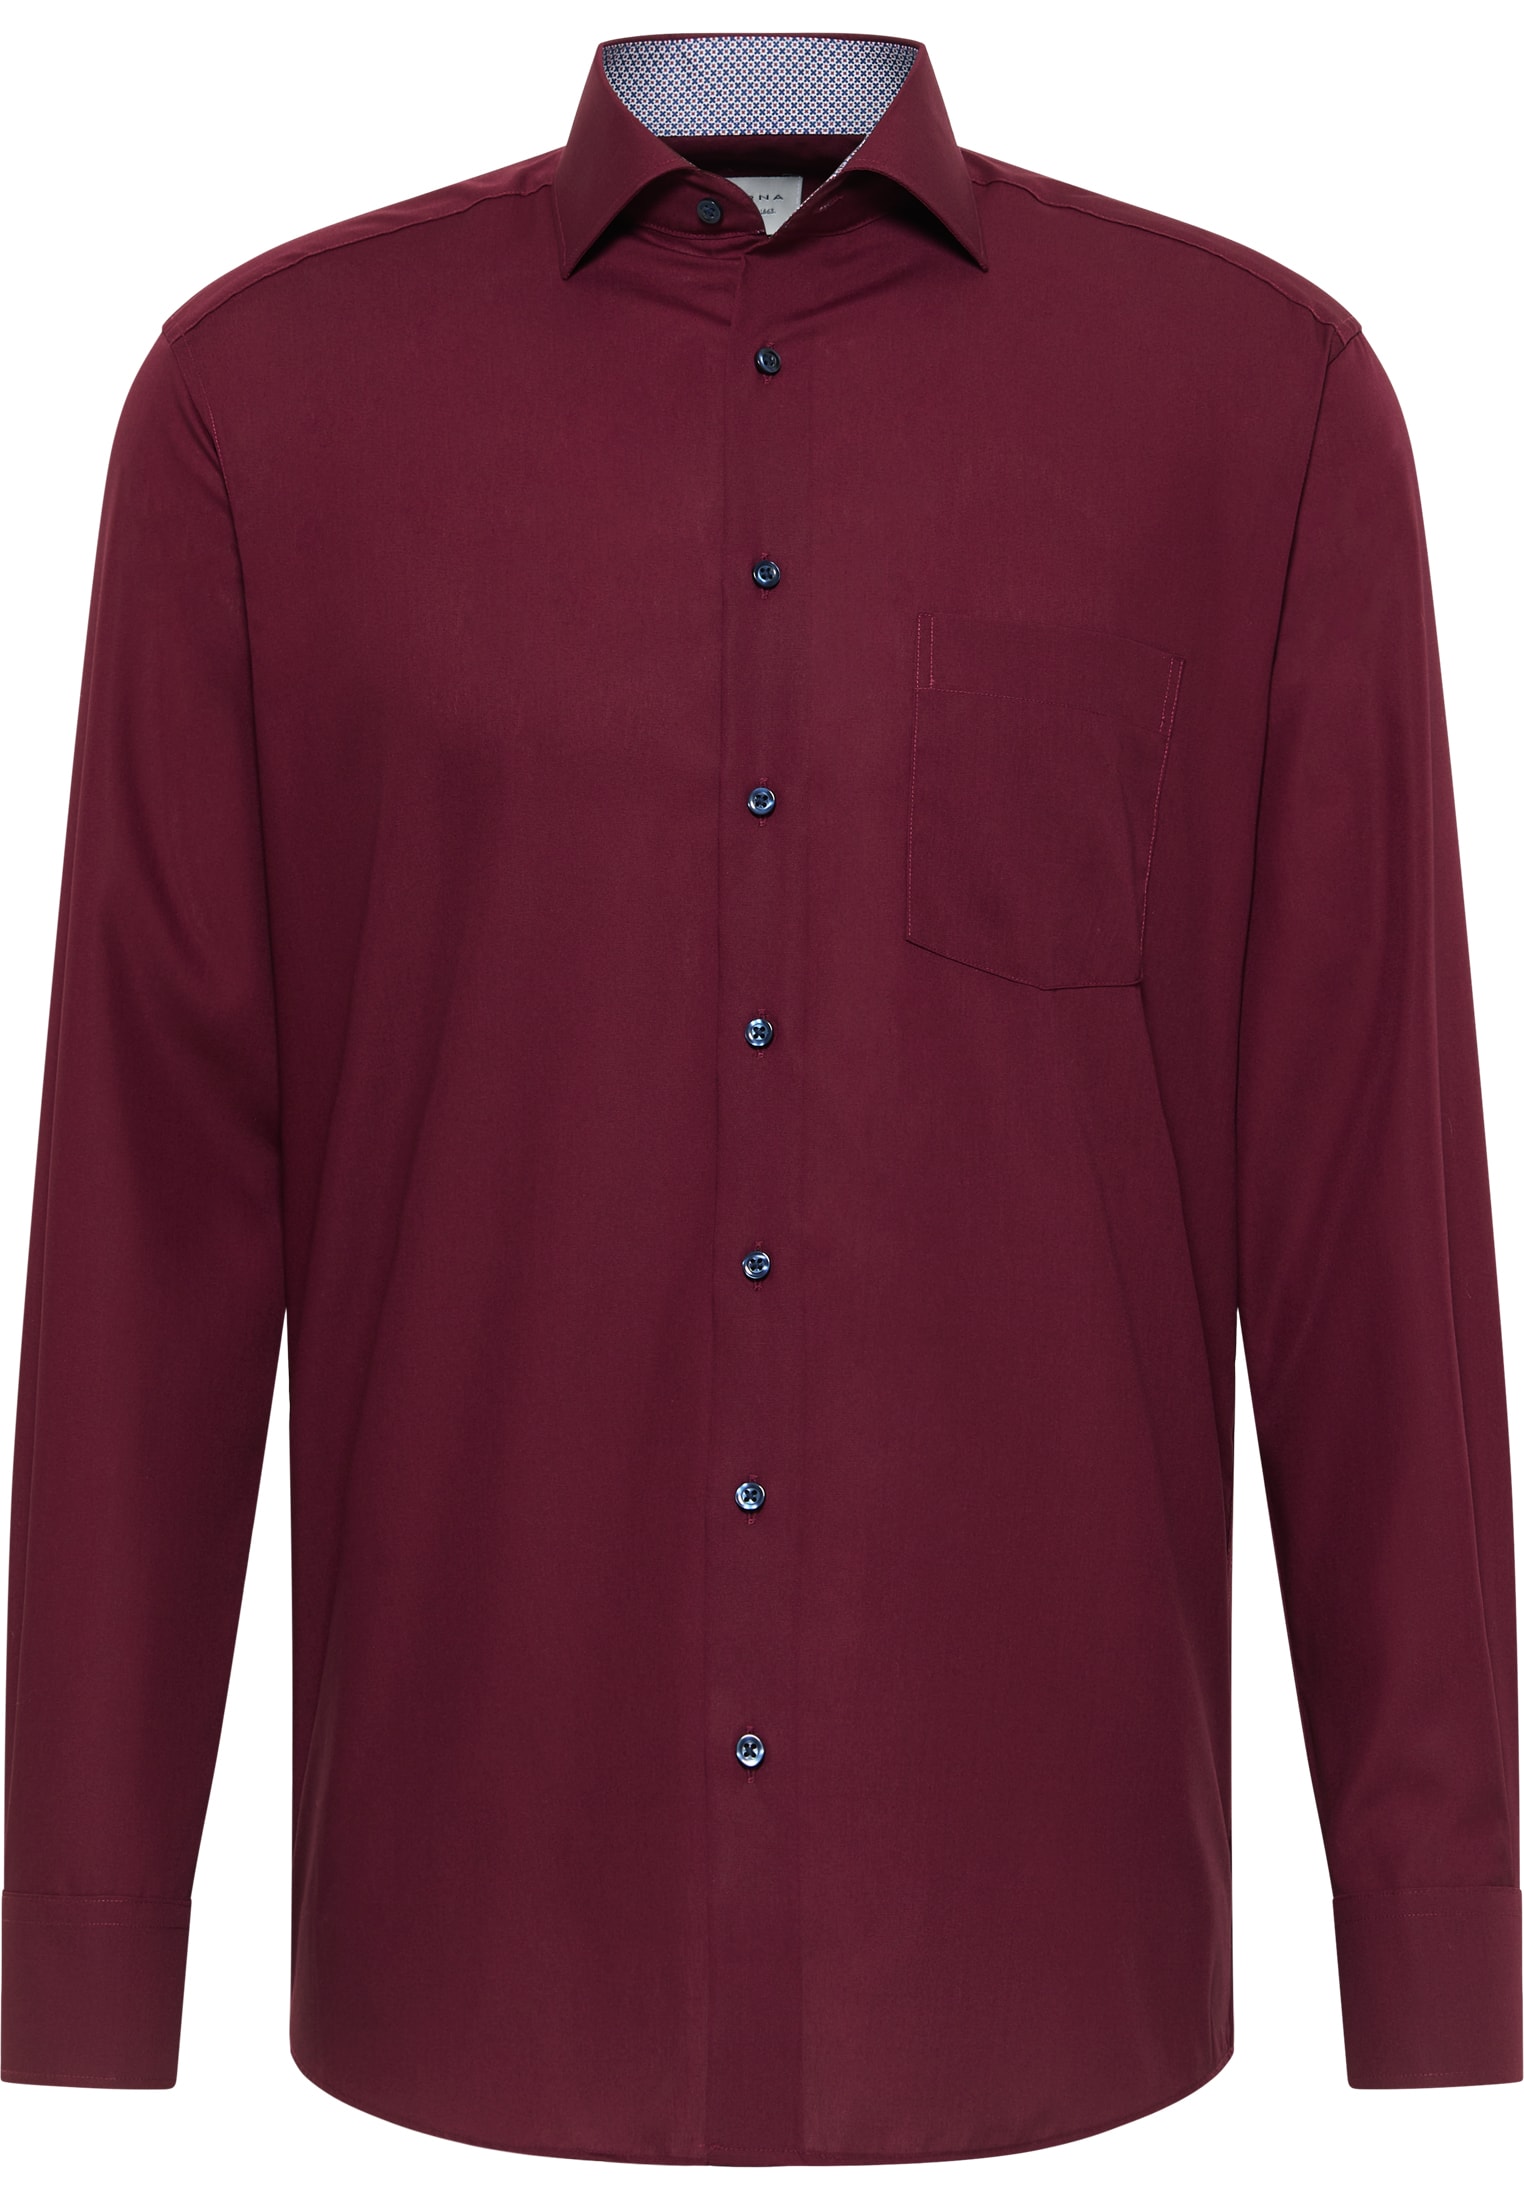 MODERN FIT Original Shirt in wine red plain